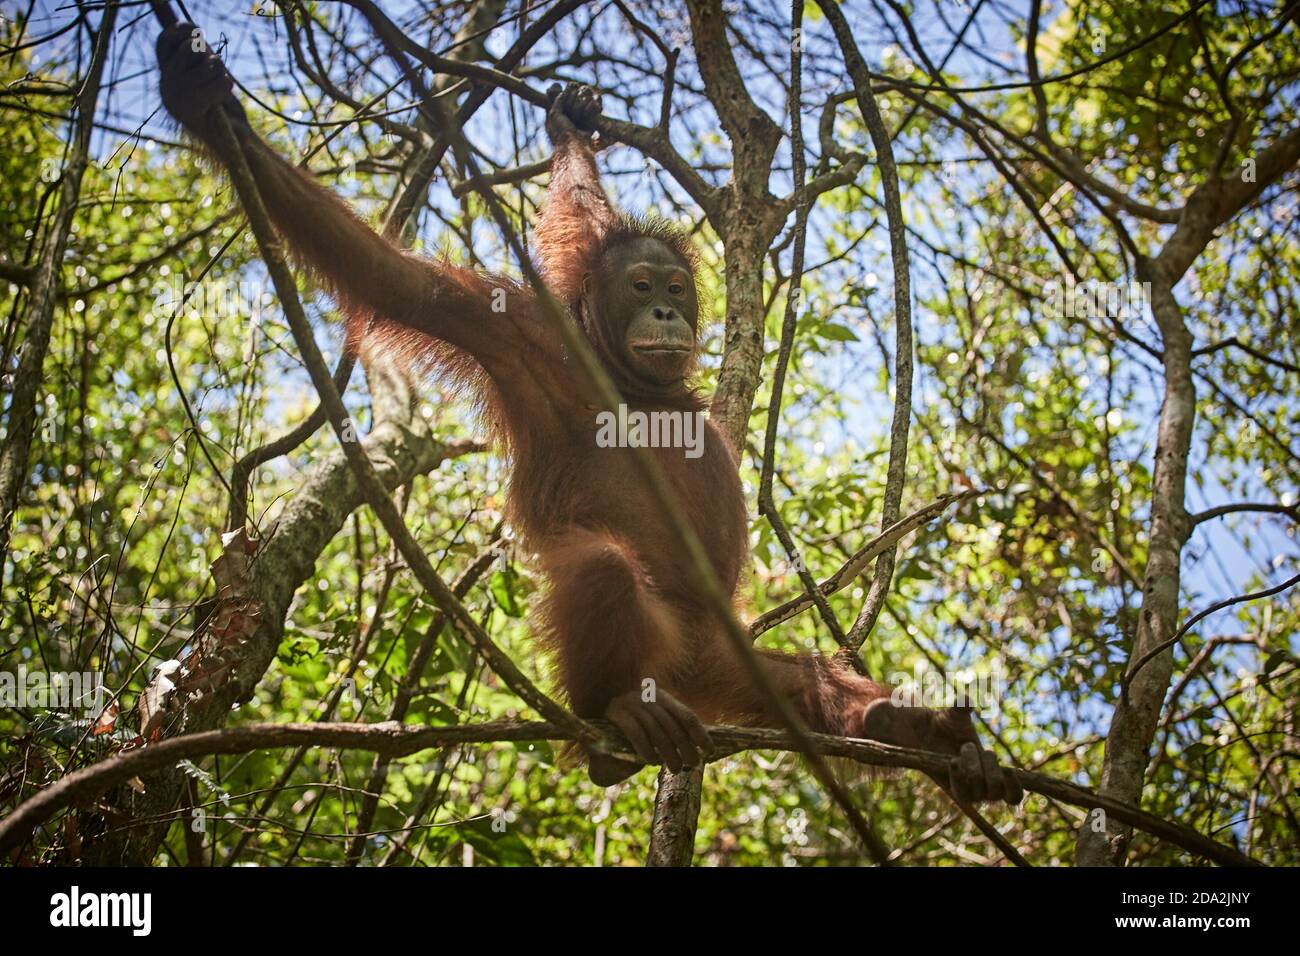 Central Kalimantan, Februar 2016, Pongo pygmaeus, Borneo orangutan im Dschungel. Stockfoto